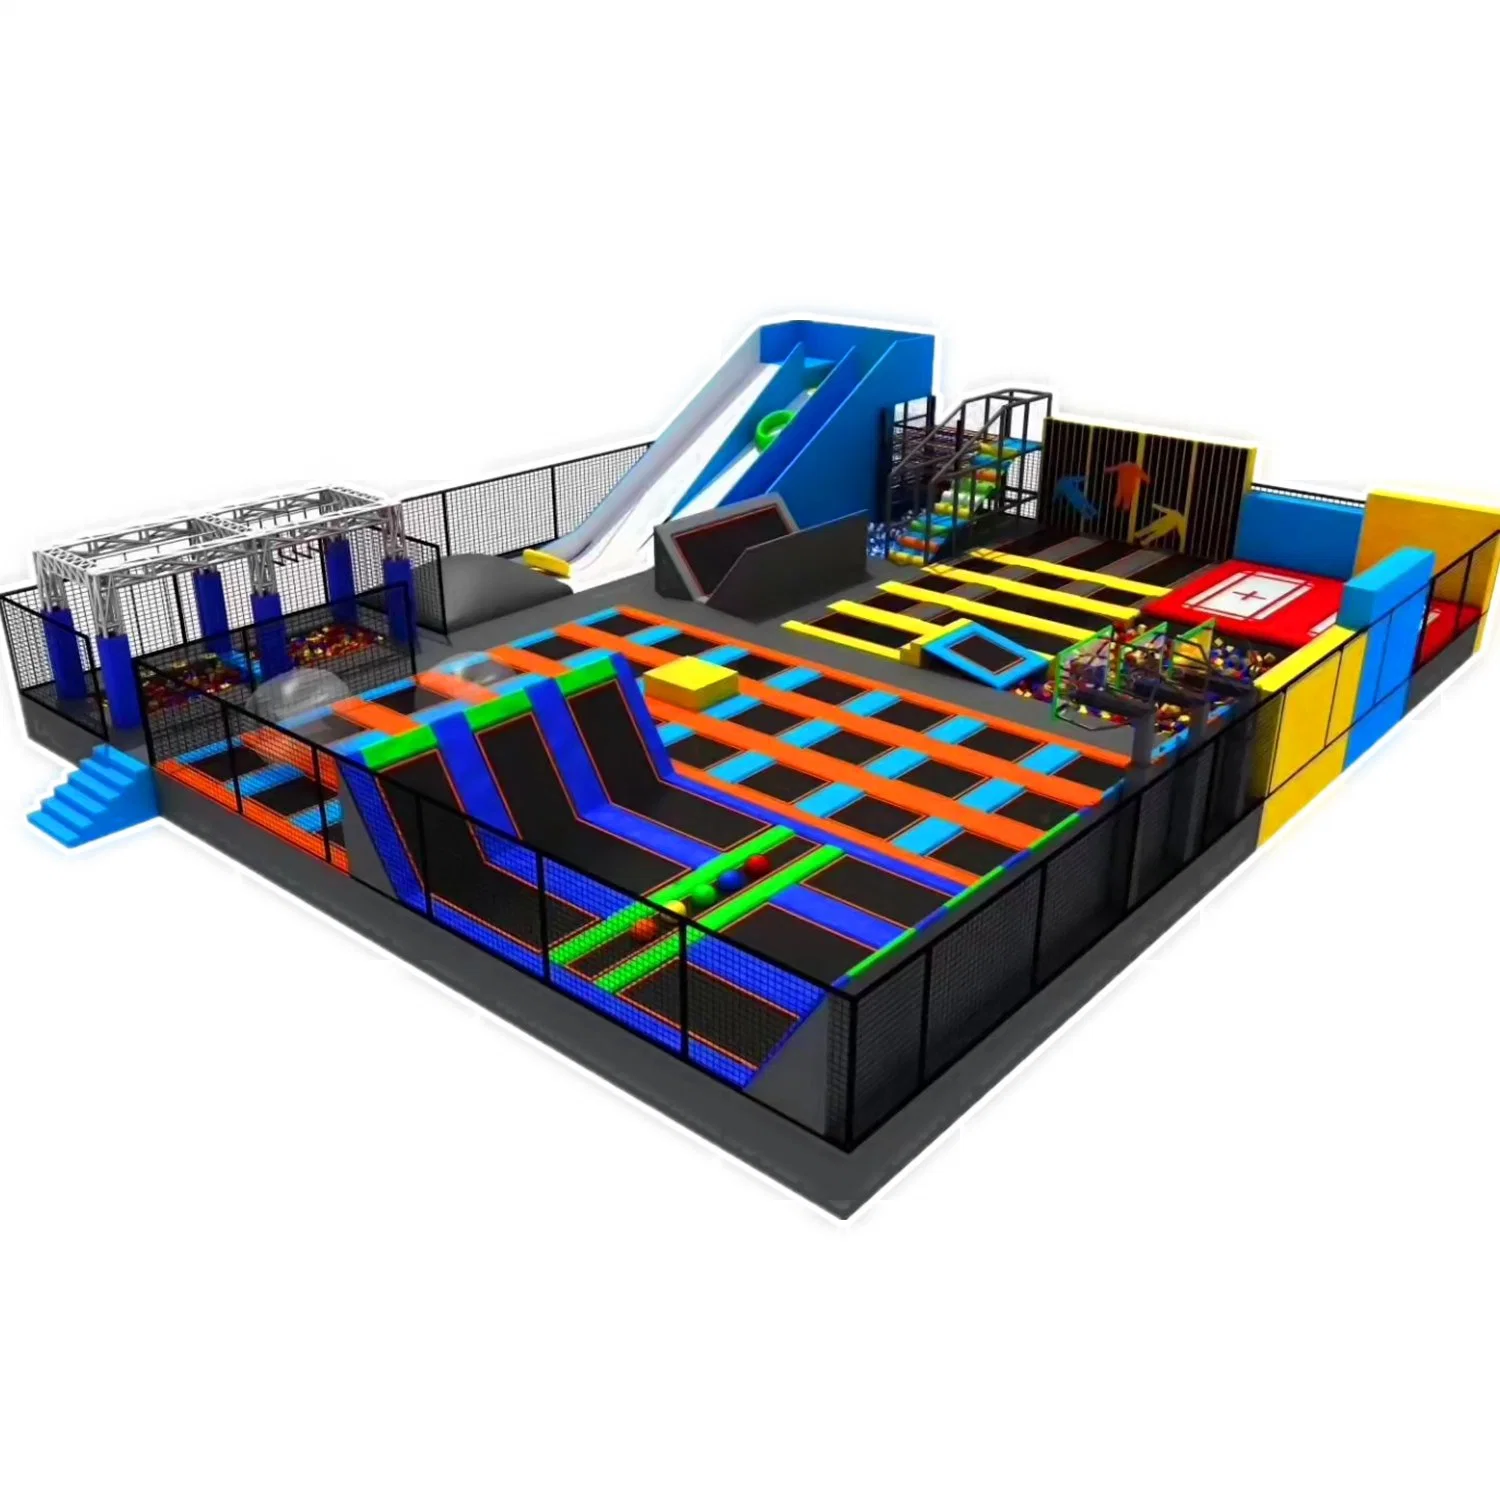 Children's Large Adult Amusement Park Trampoline Park Indoor Playground Equipment